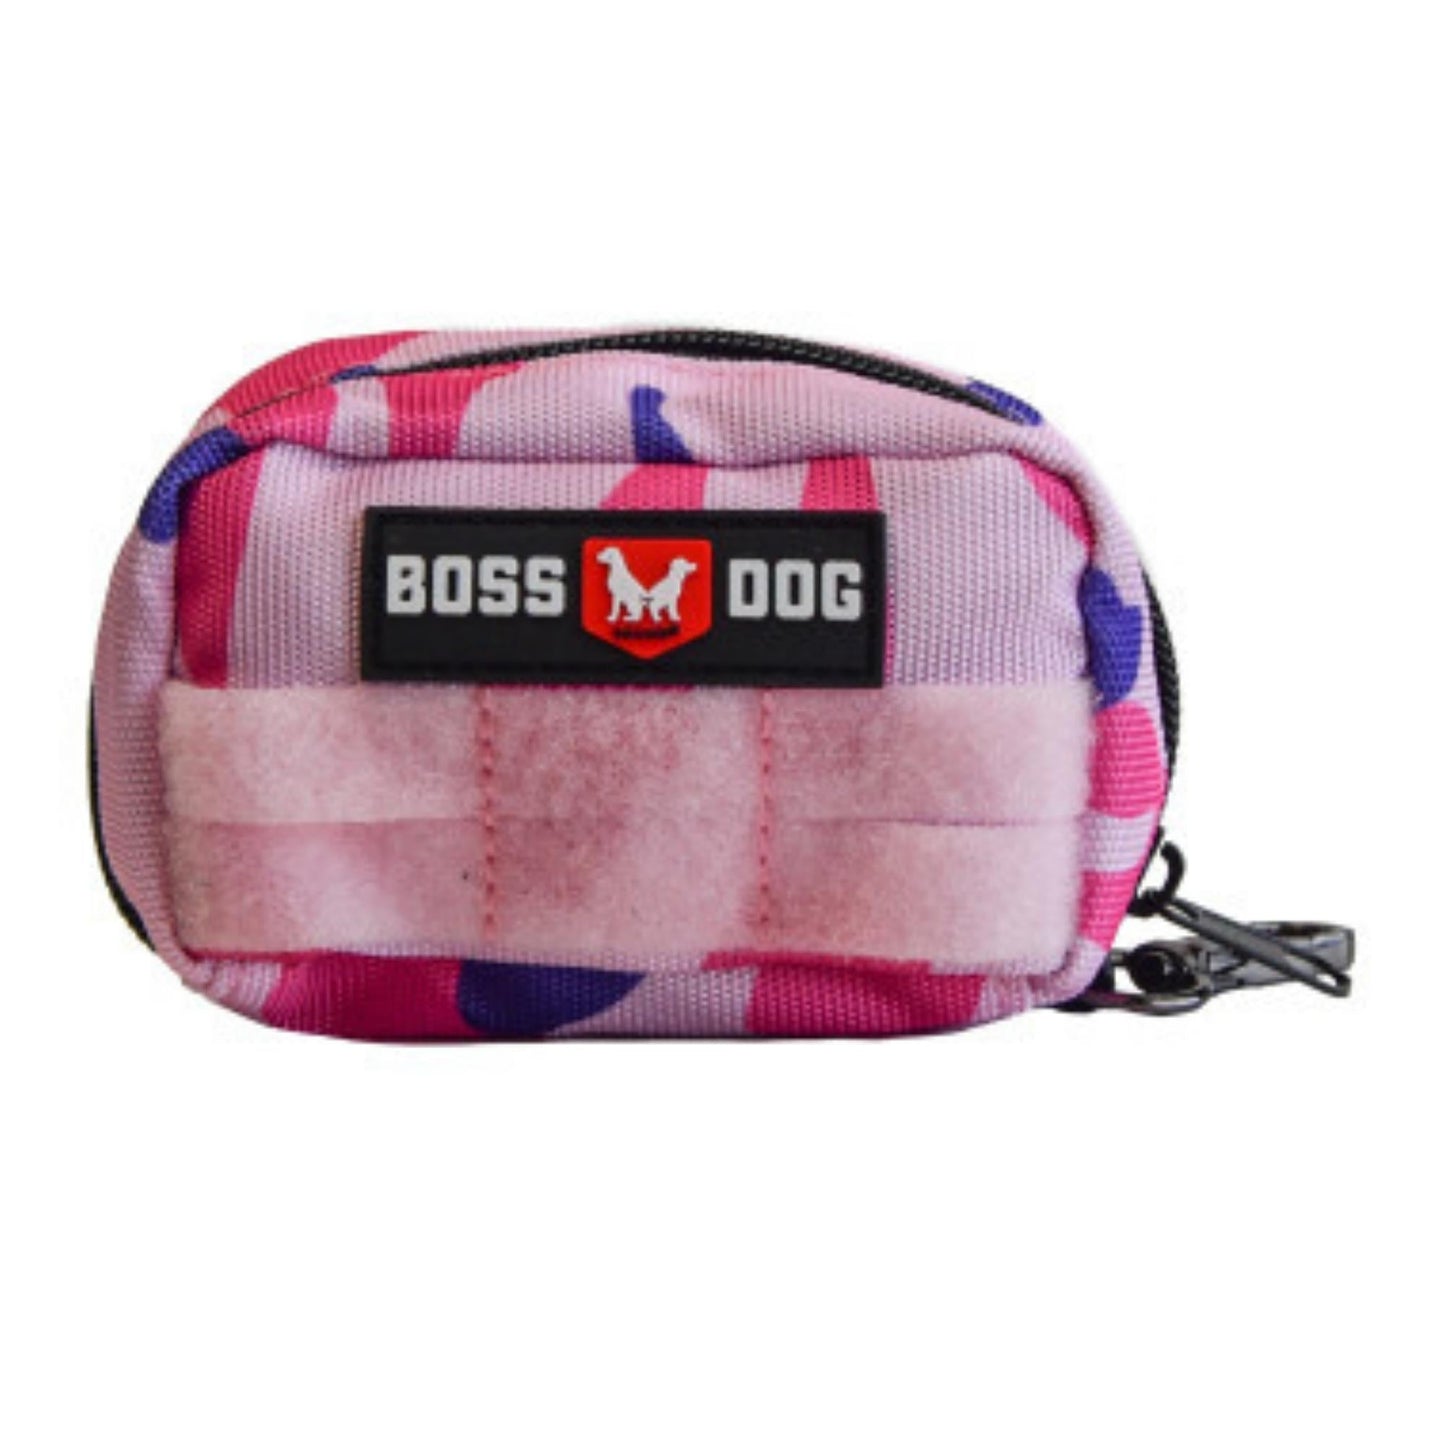 Boss Dog Tactical Molle Harness Bag Pink Camo, 1ea/Large